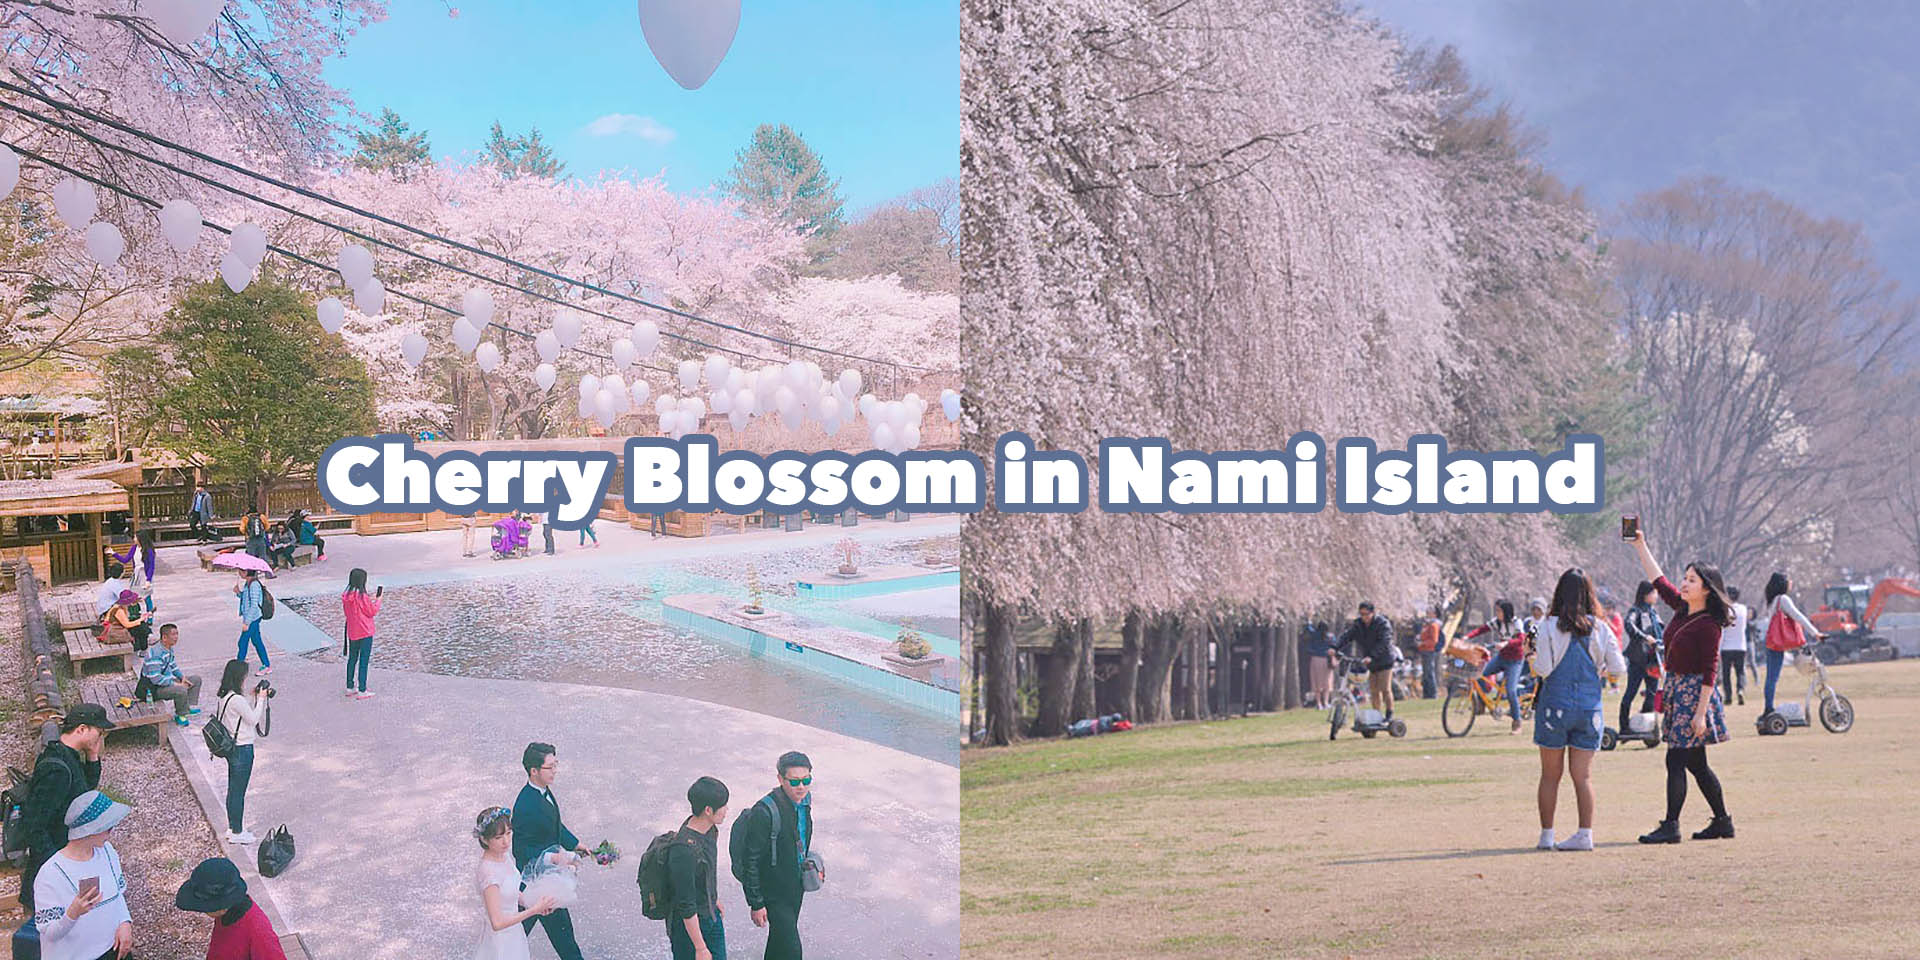 Photos] Cherry blossom scenery to be seen soon in Nami Island | HaB Korea .net